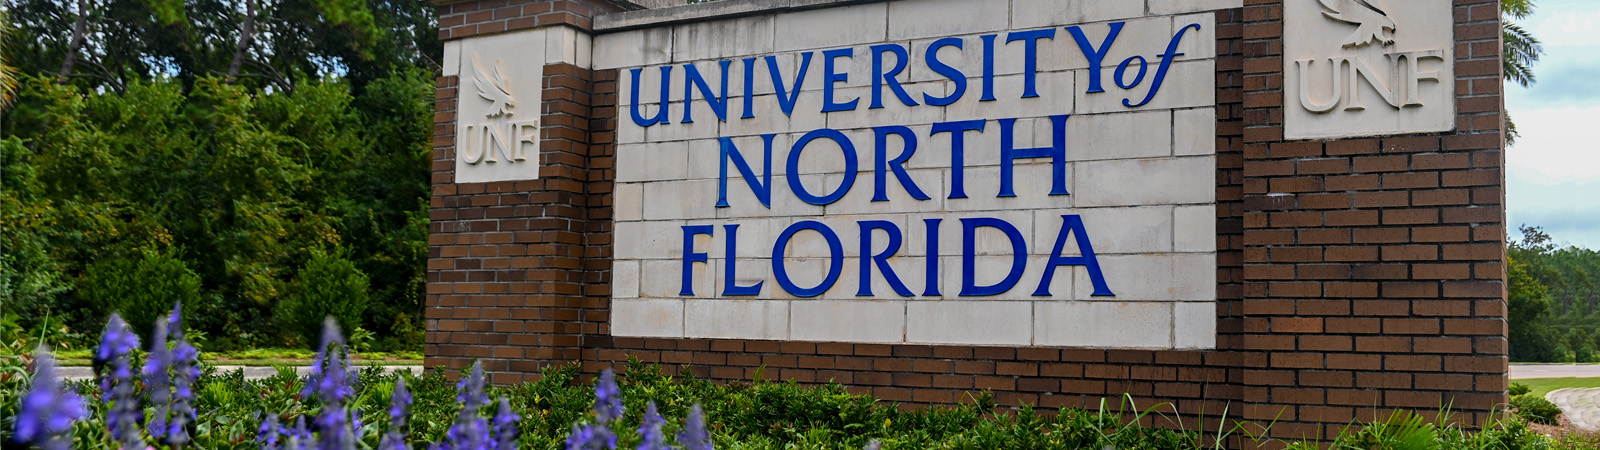 University of North Florida main entrance sign